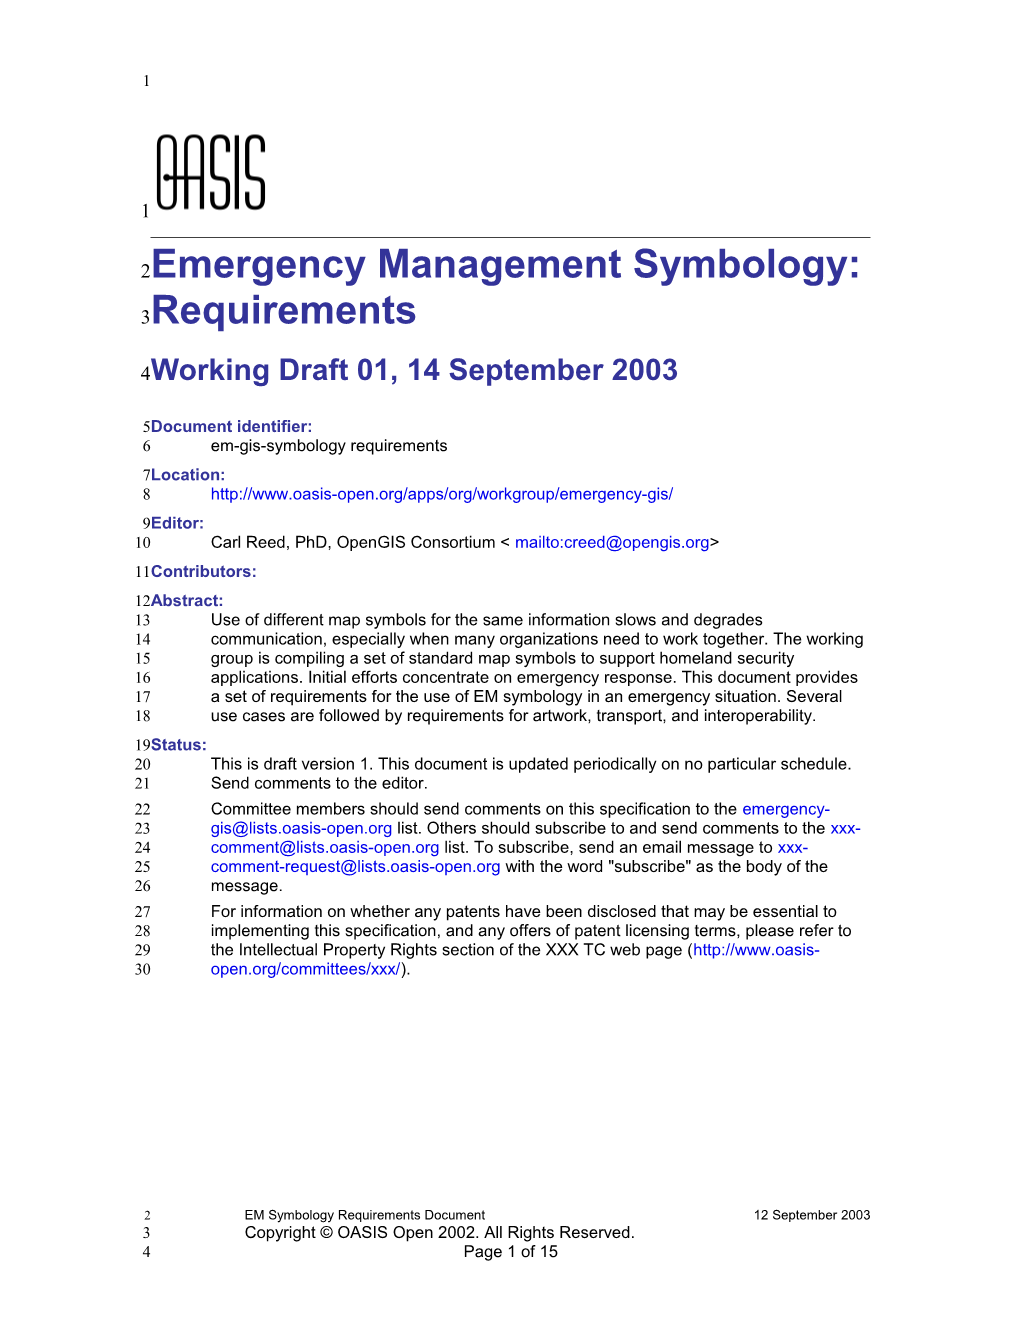 Emergency Management Symbology: Requirements